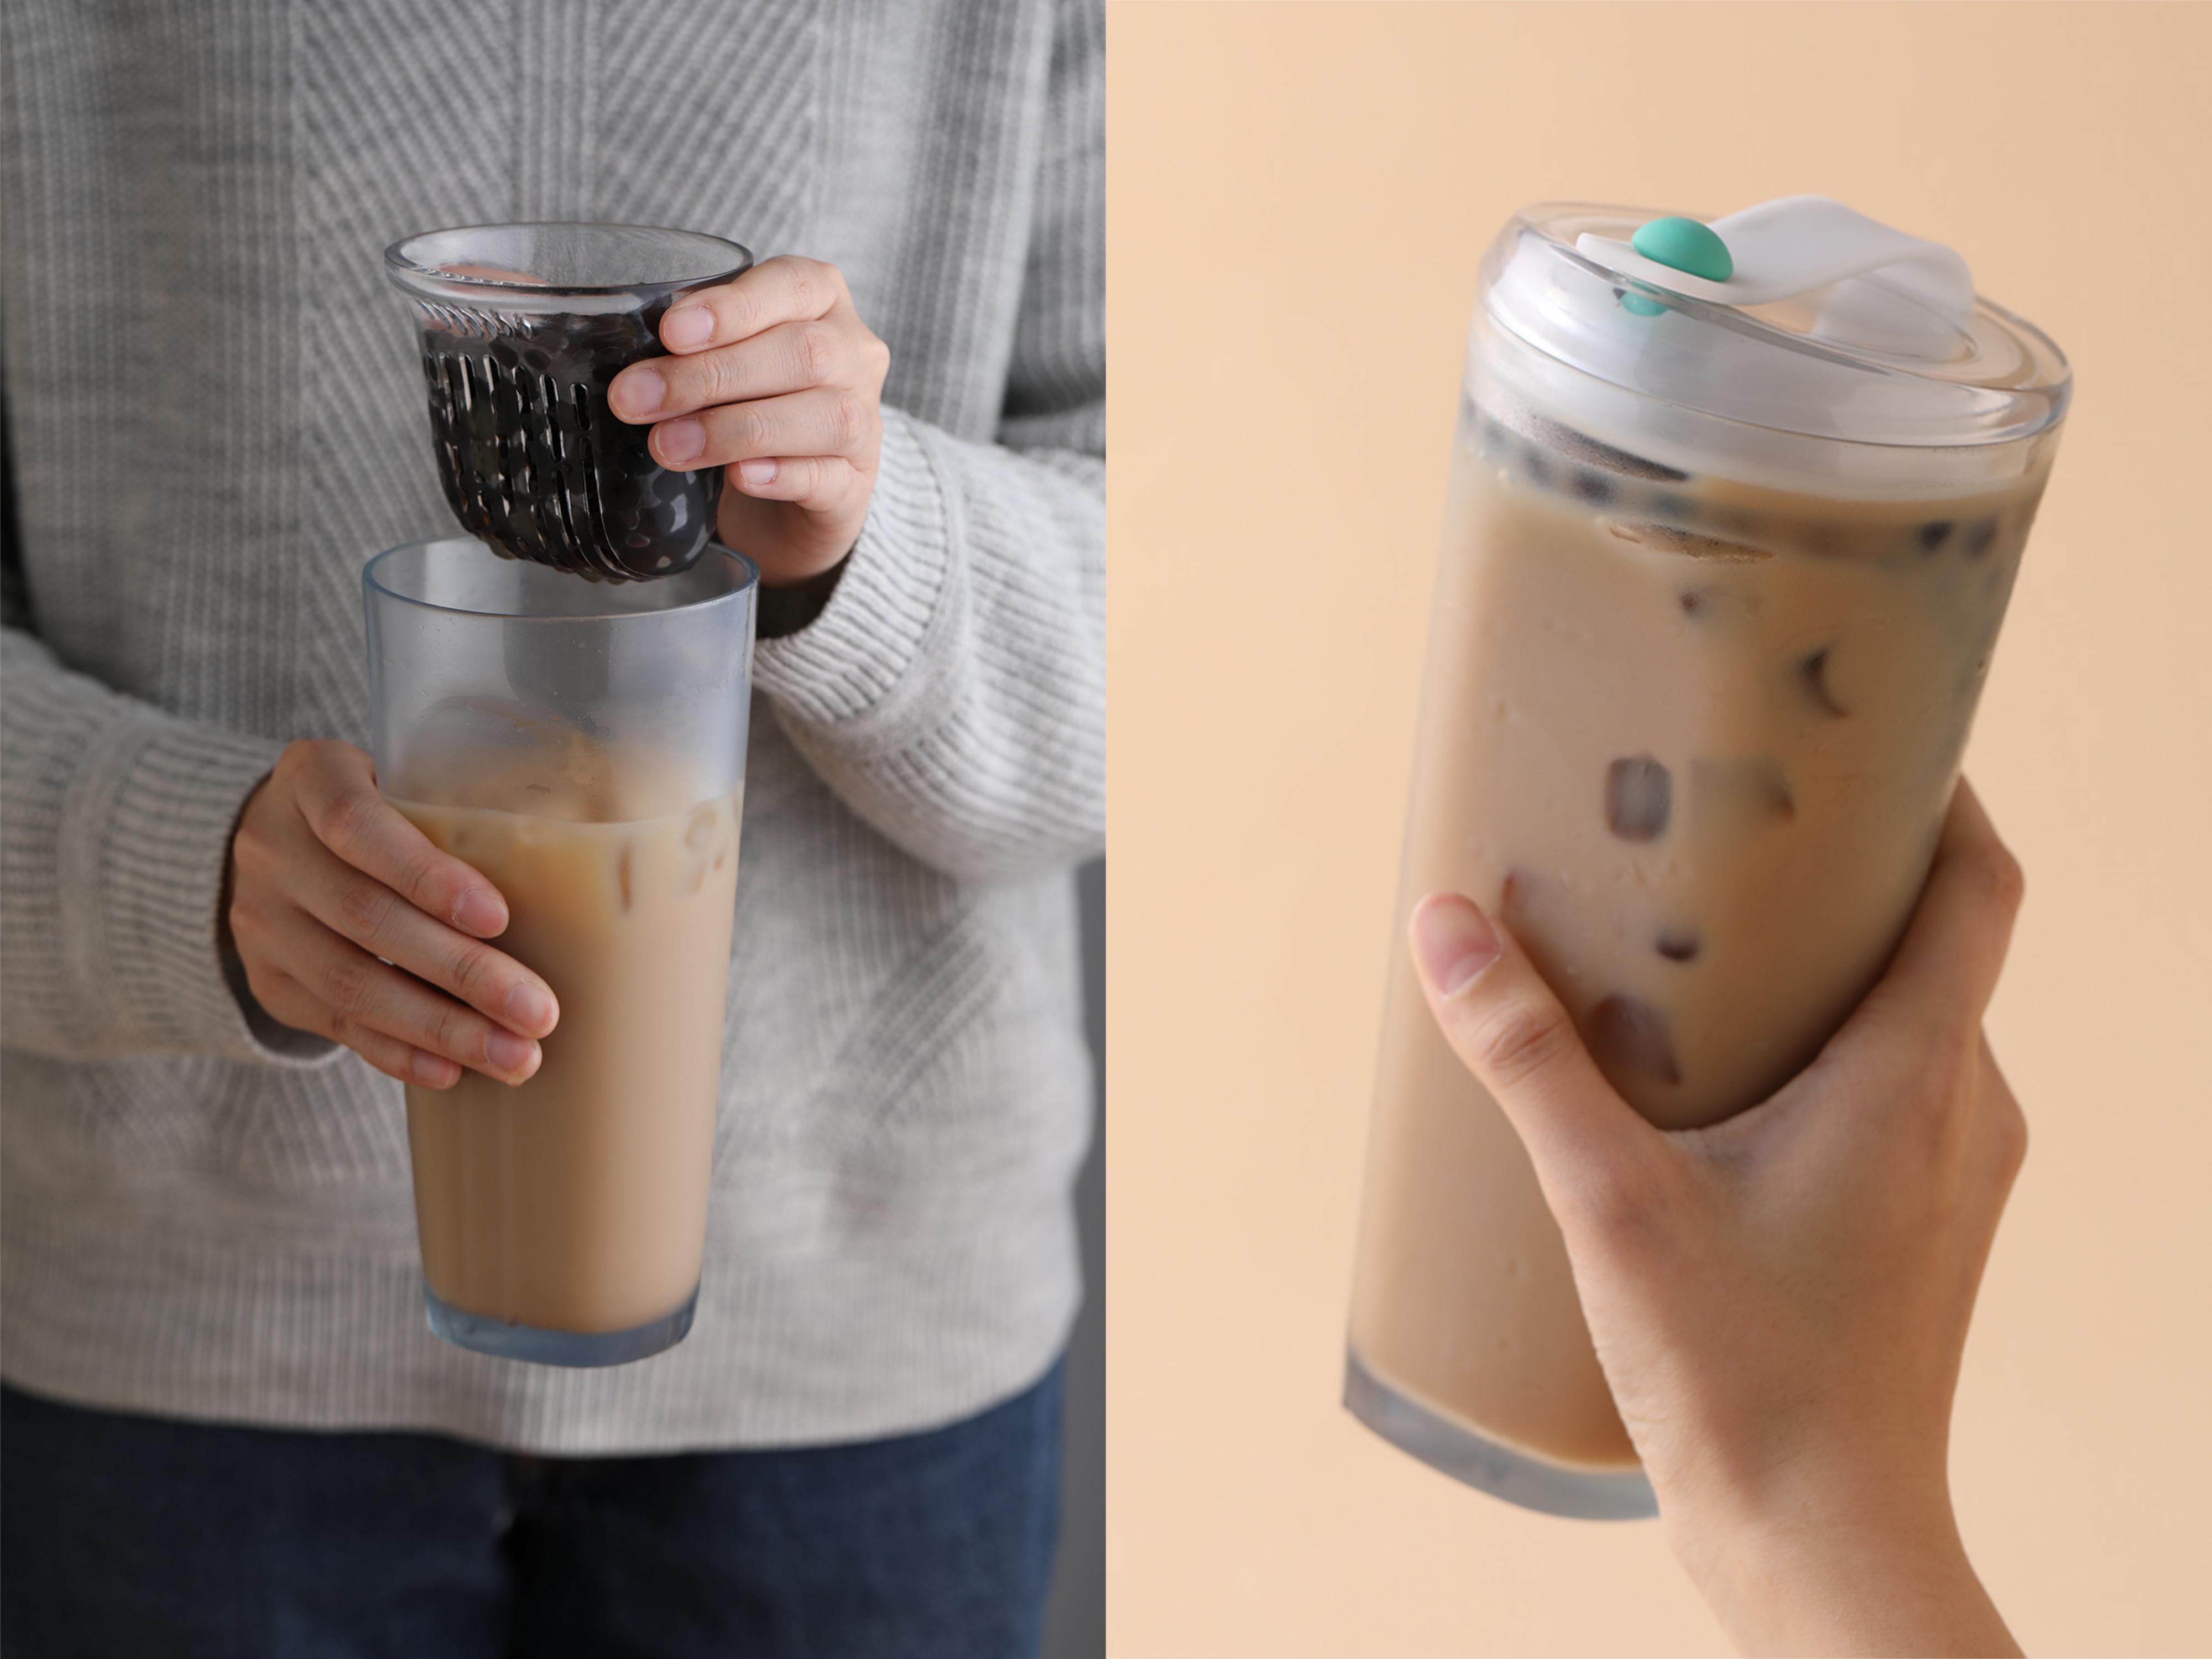 The Shatterproof Reusable Cup for Boba - Dodoko